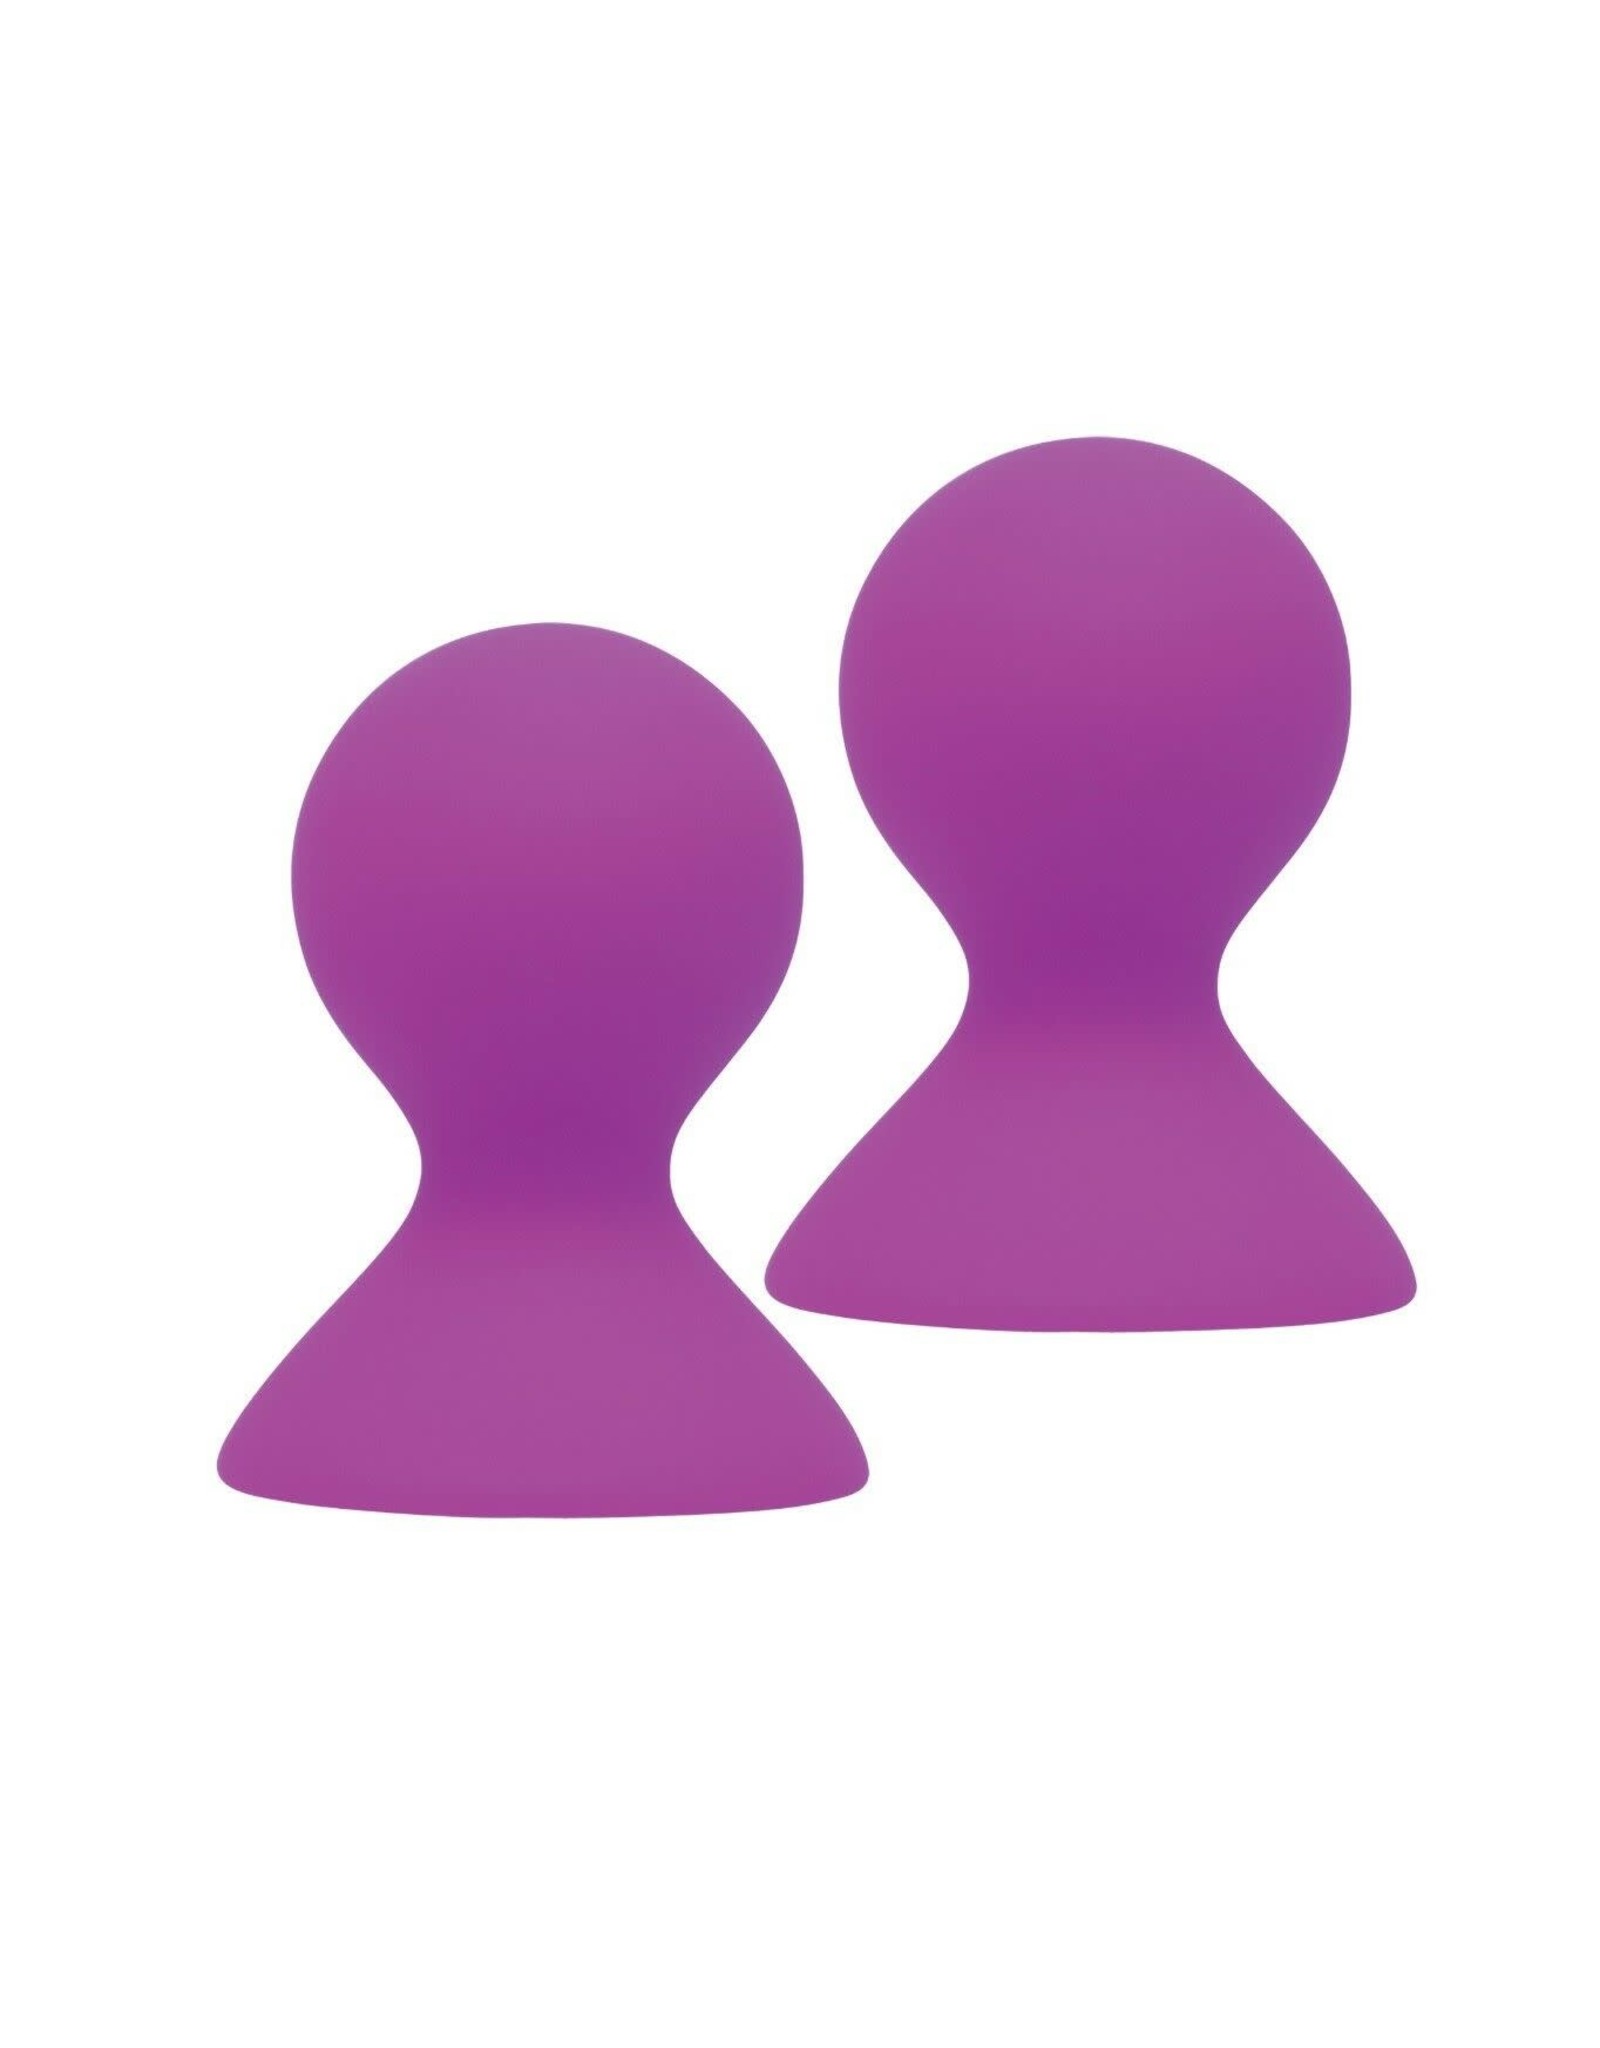 Icon Brands Nip Pulls Purple